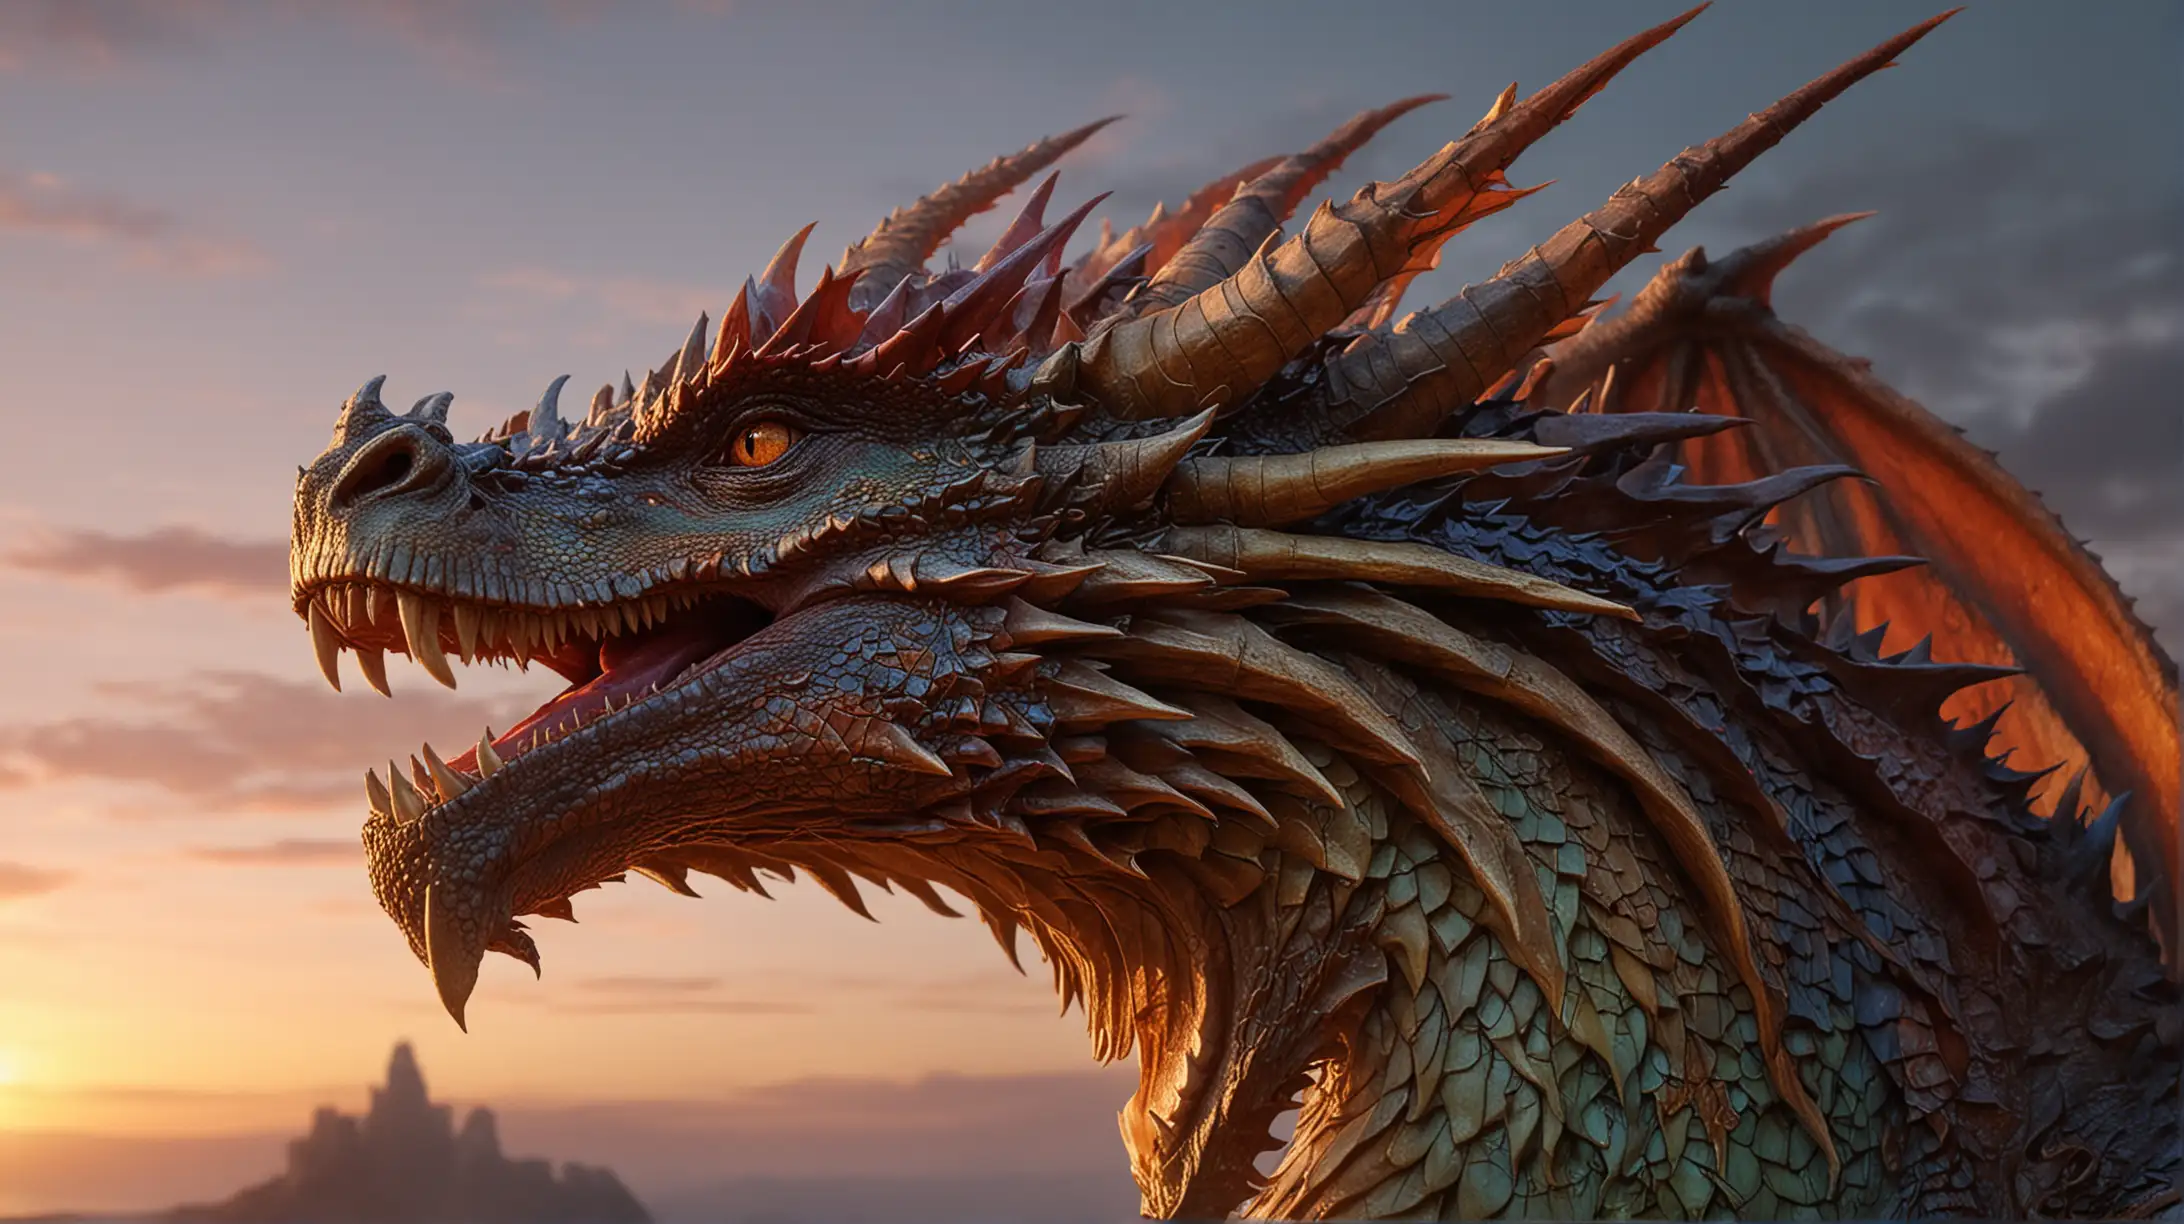 Majestic King Dragon at Sunset Hyperrealistic 8K Ultra HD Portrait